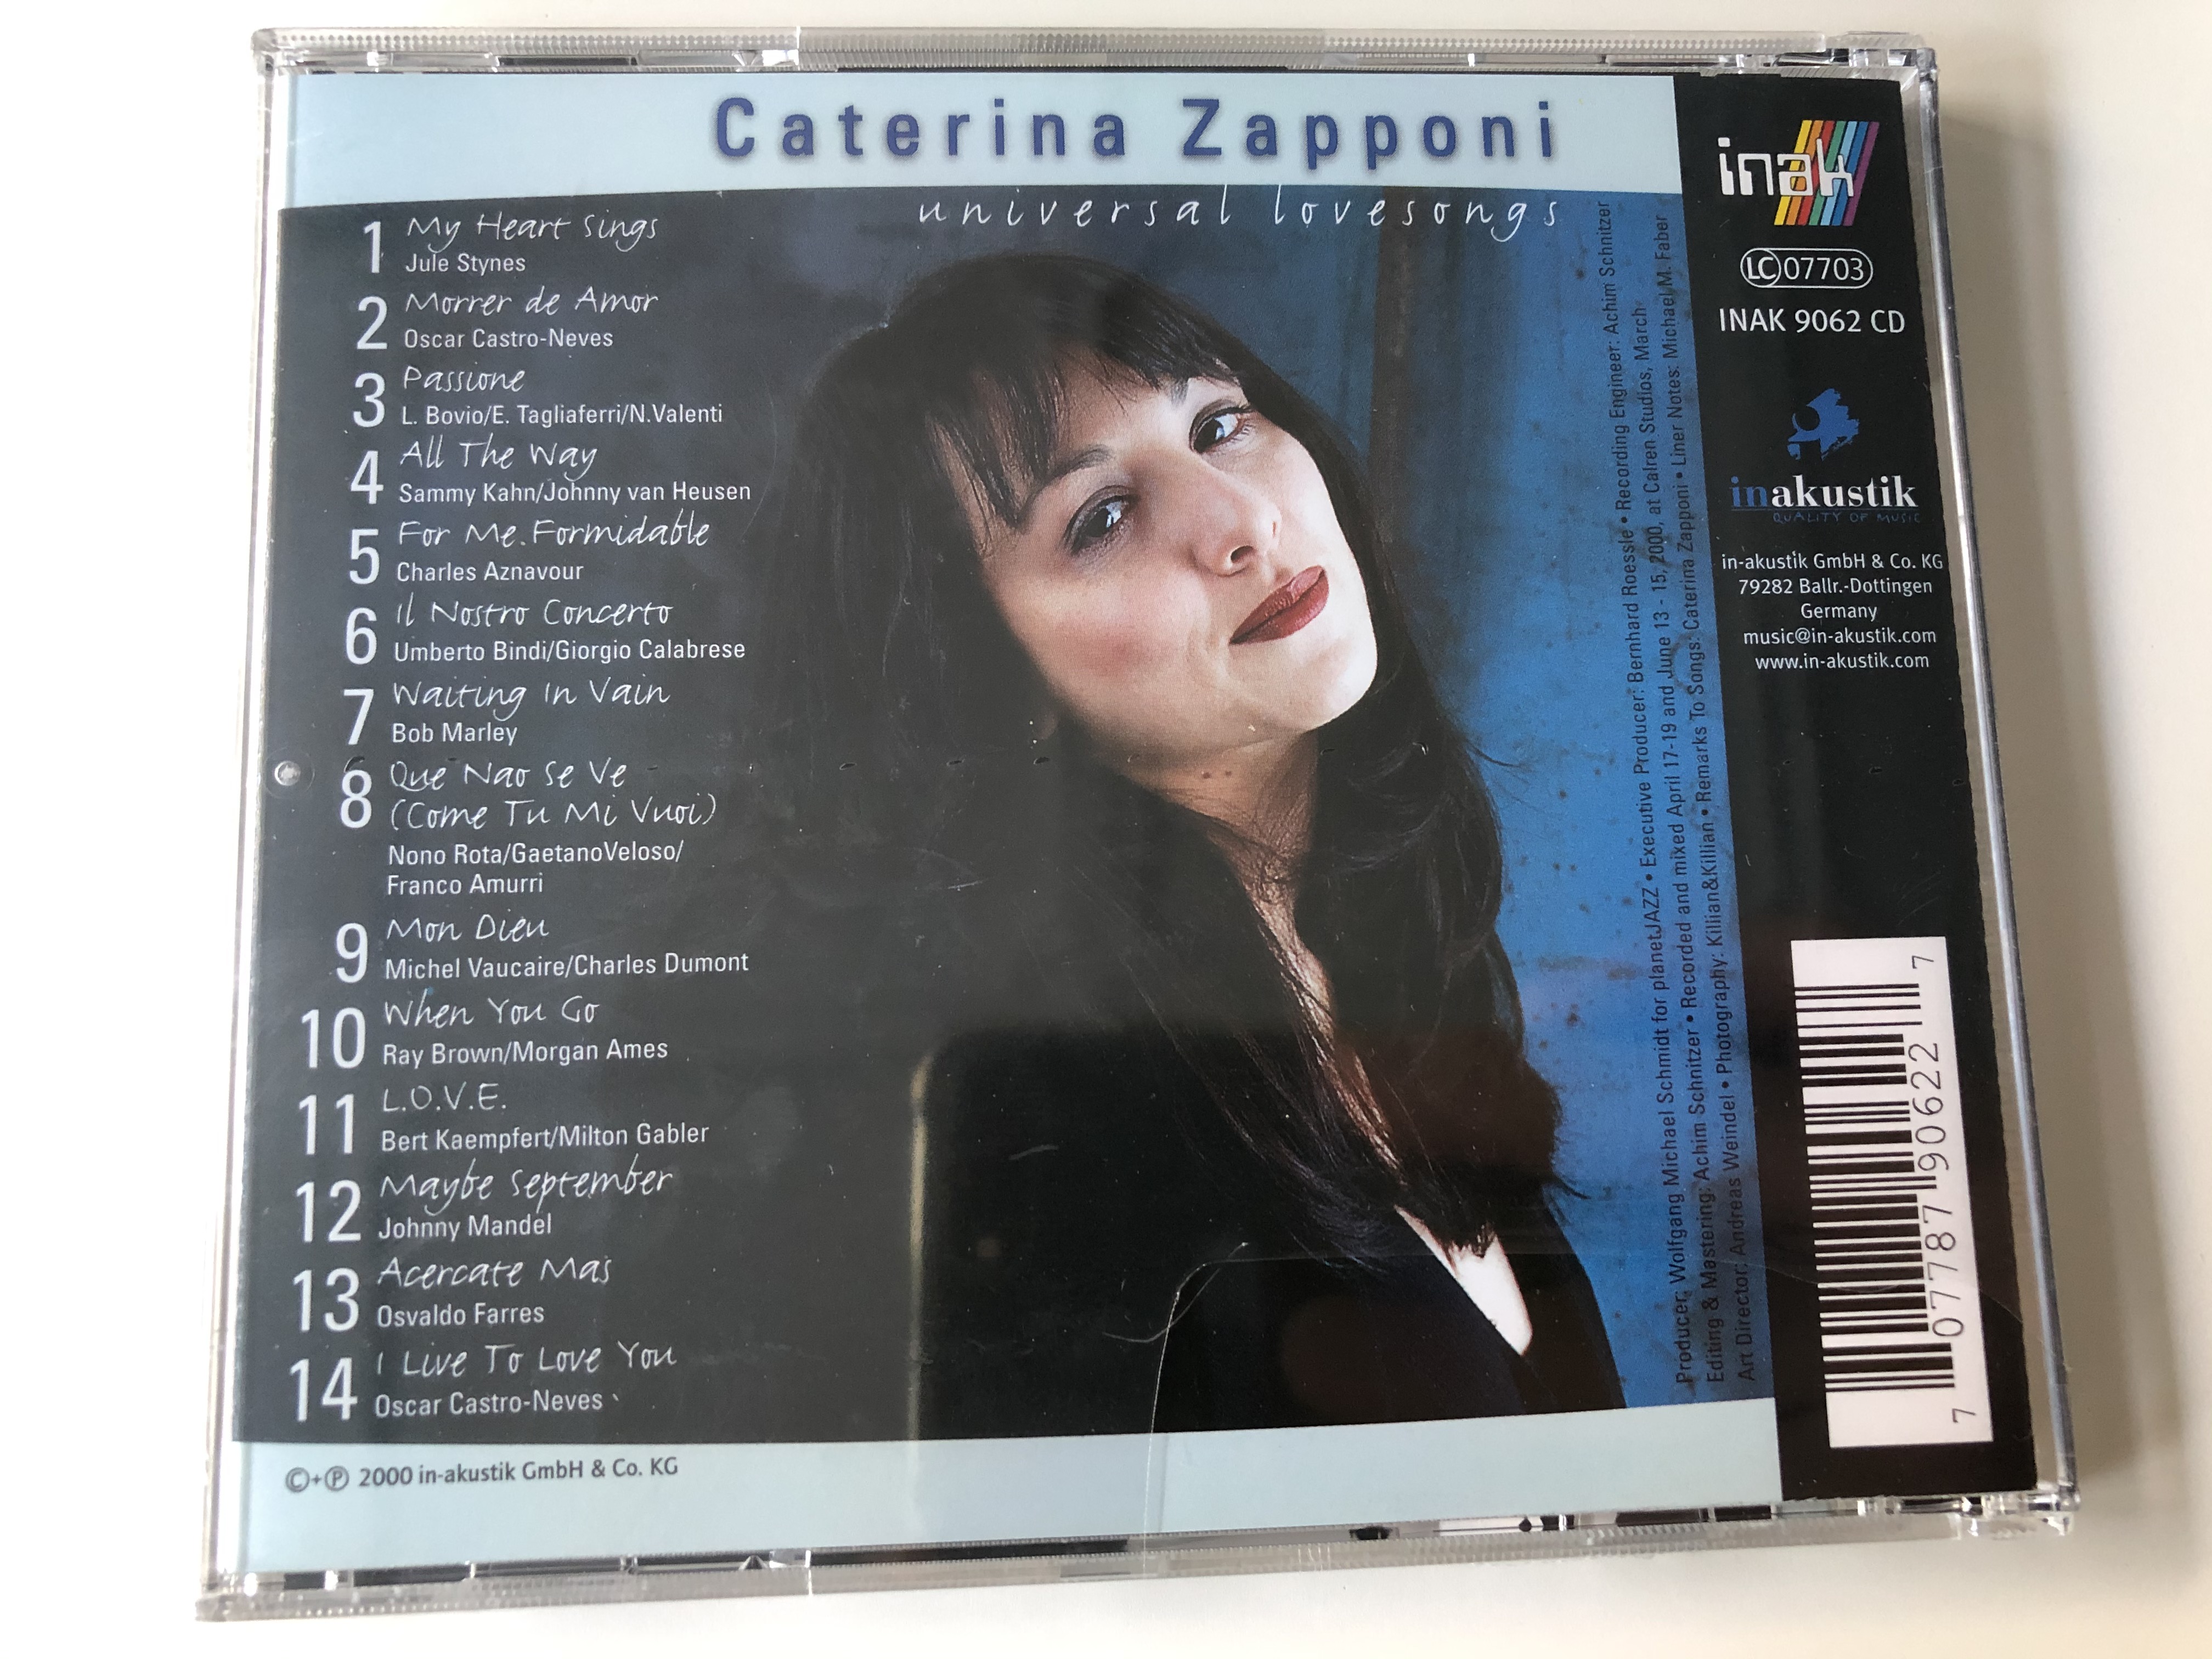 caterina-zapponi-universal-love-songs-with-monty-alexander-martin-drew-davide-petrocca-lorenzo-petrocca-inak-audio-cd-2000-inak-9062-cd-3-.jpg